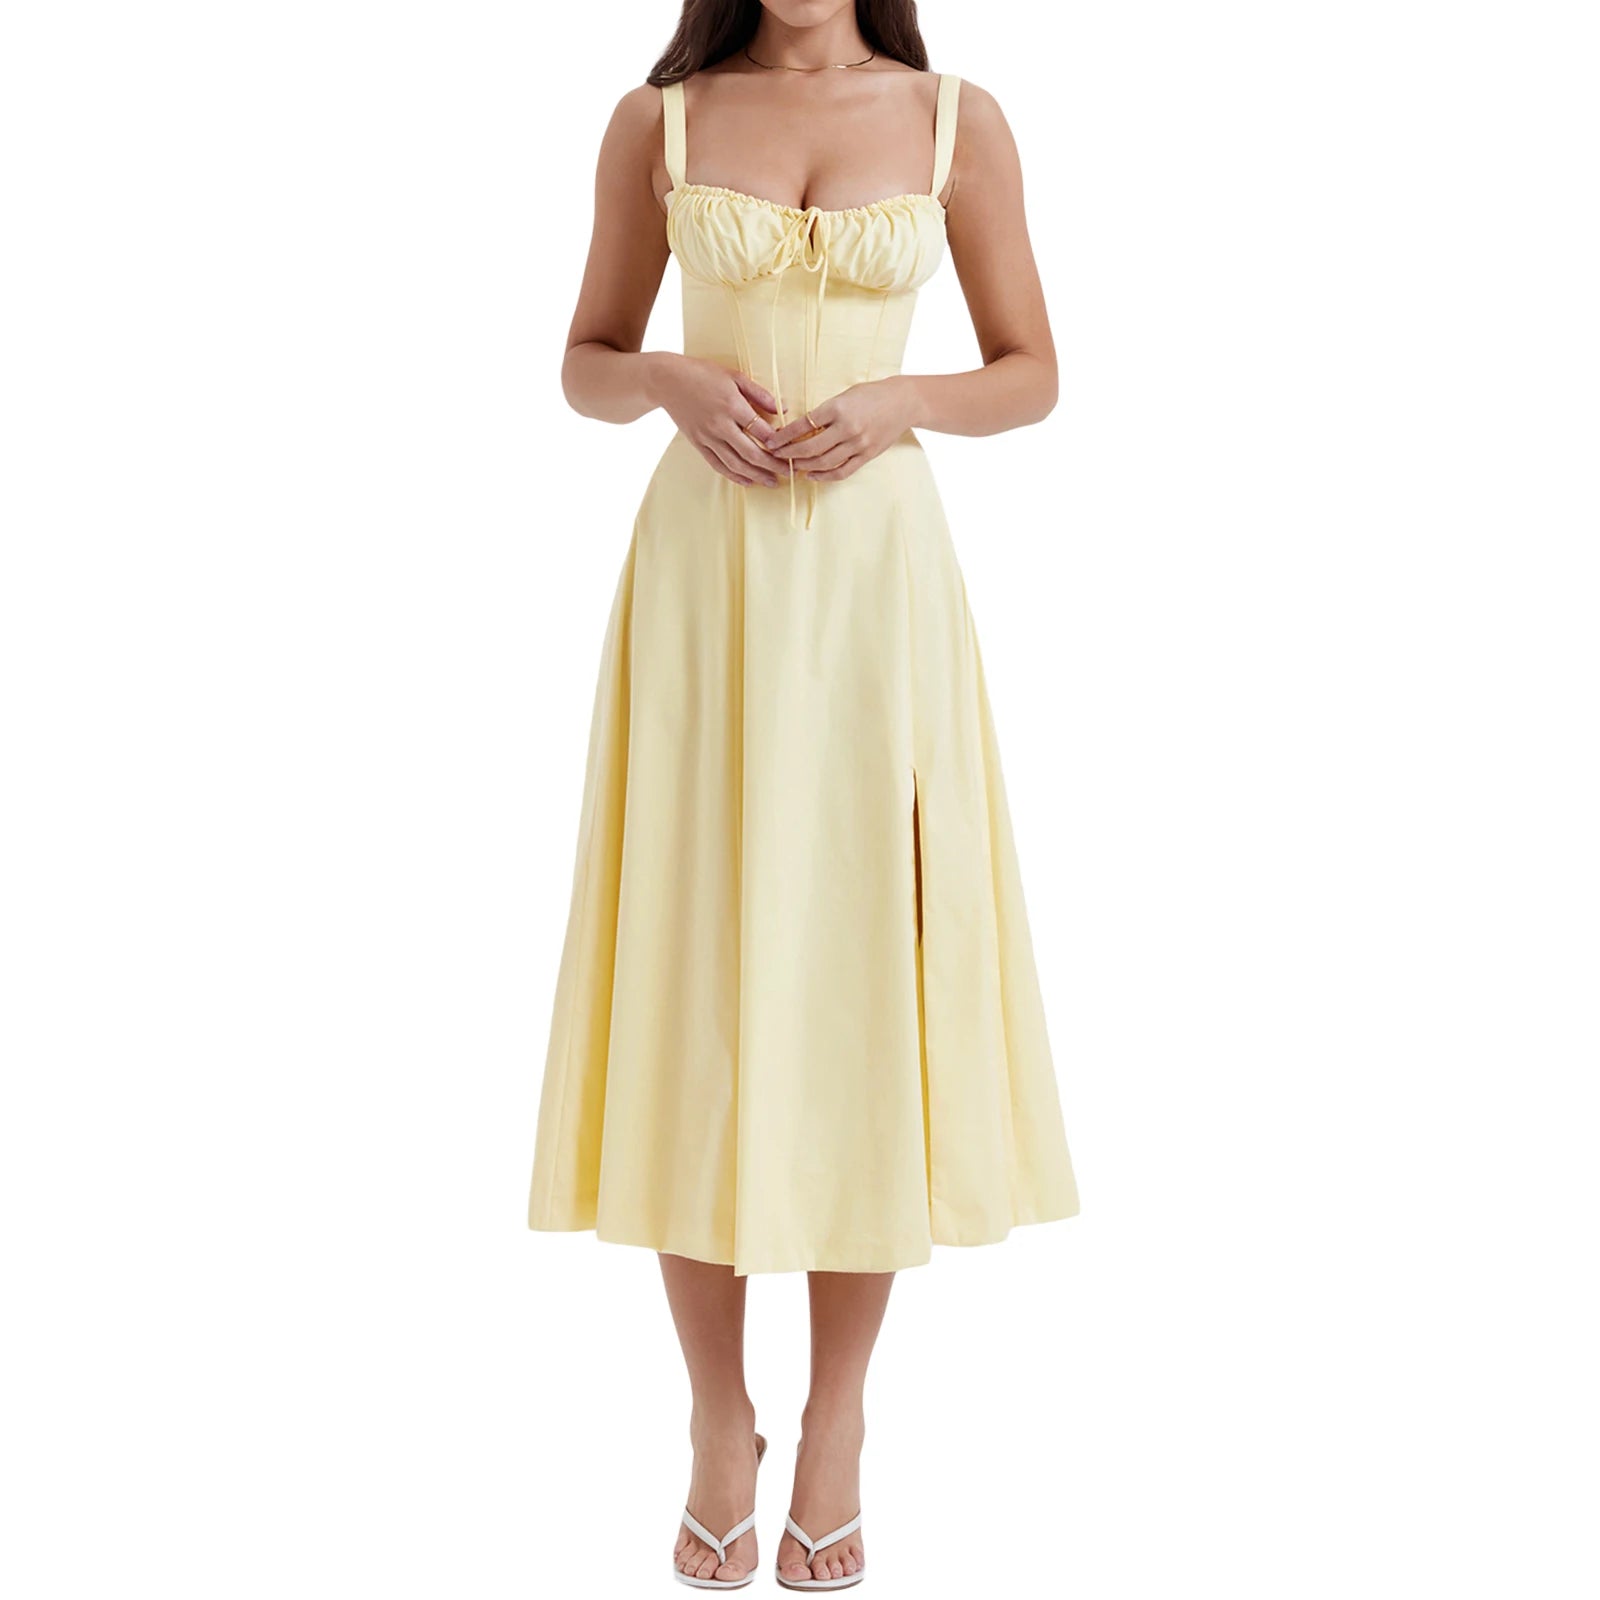 VastiVogue Women's Solid Sleeveless Summer Dress VestiVogue Yellow S